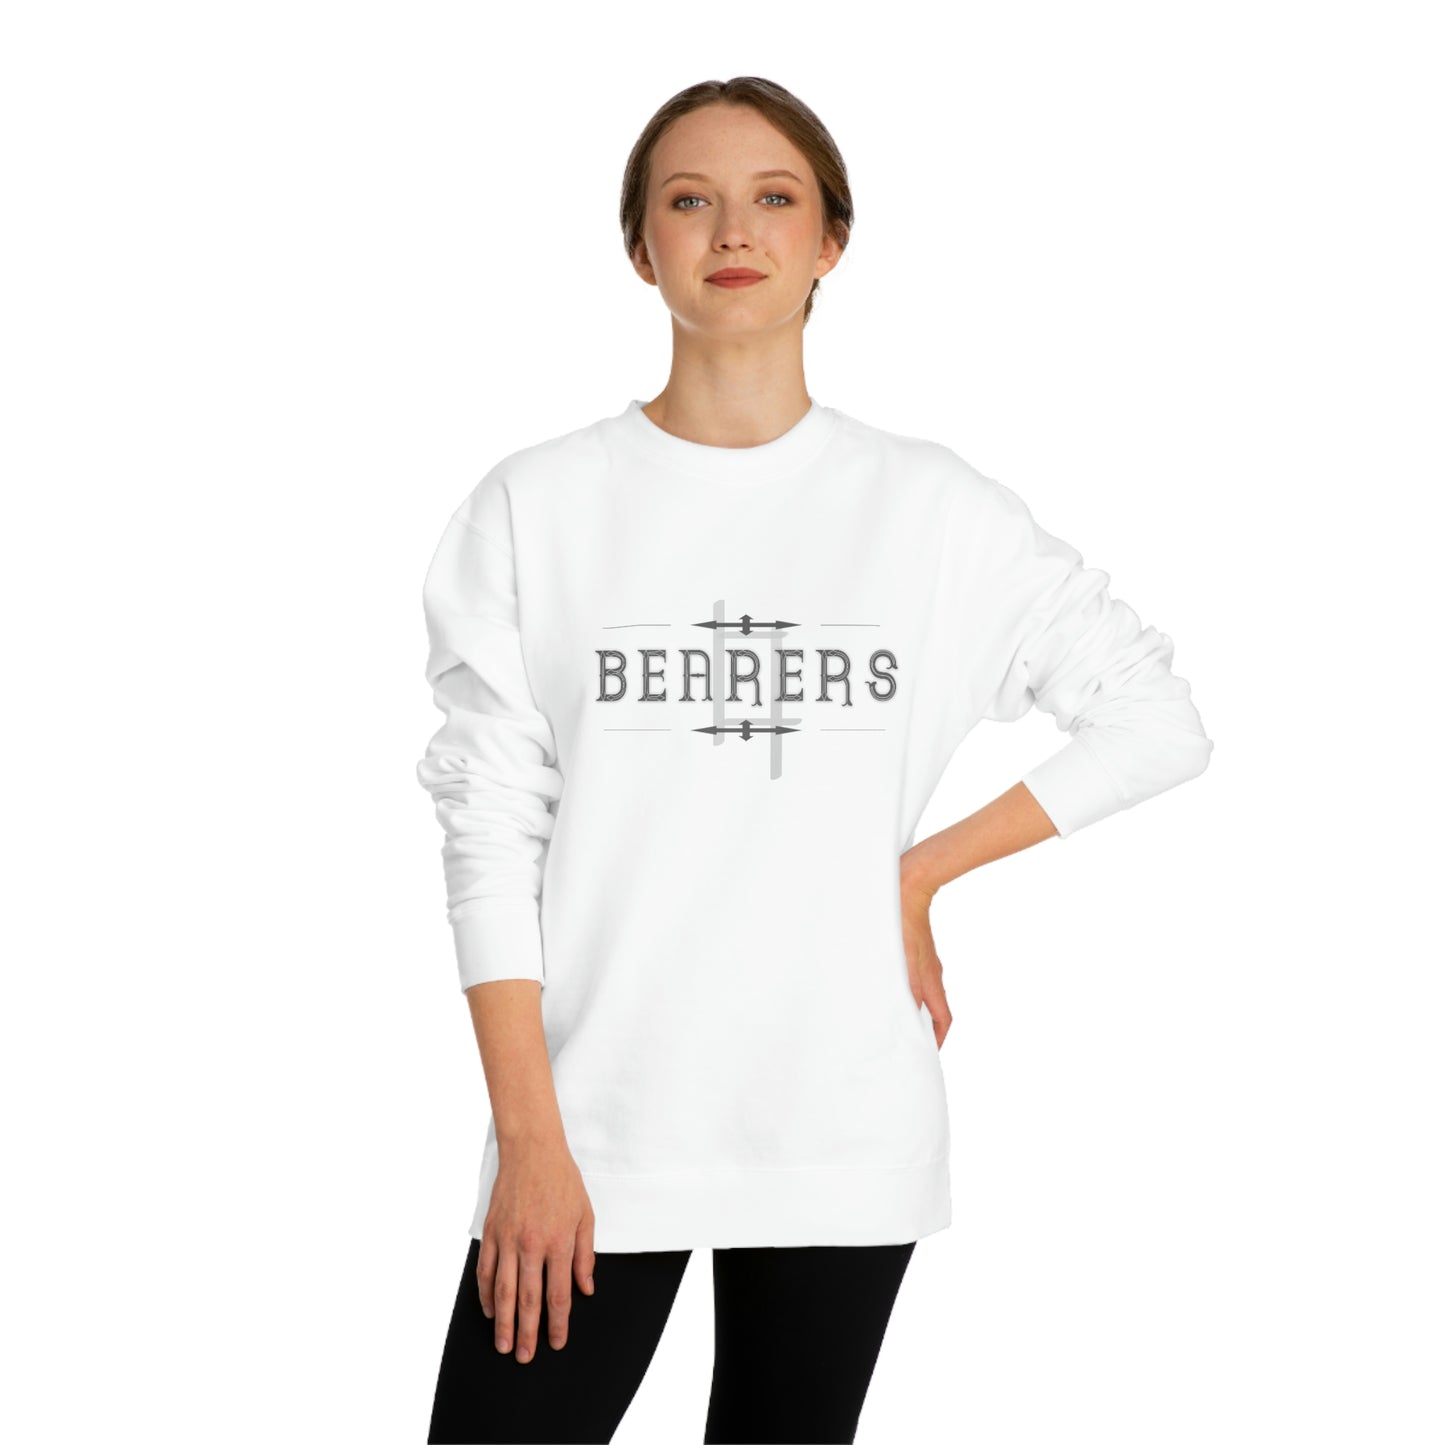 Bearers Unisex Crew Neck Sweatshirt - White